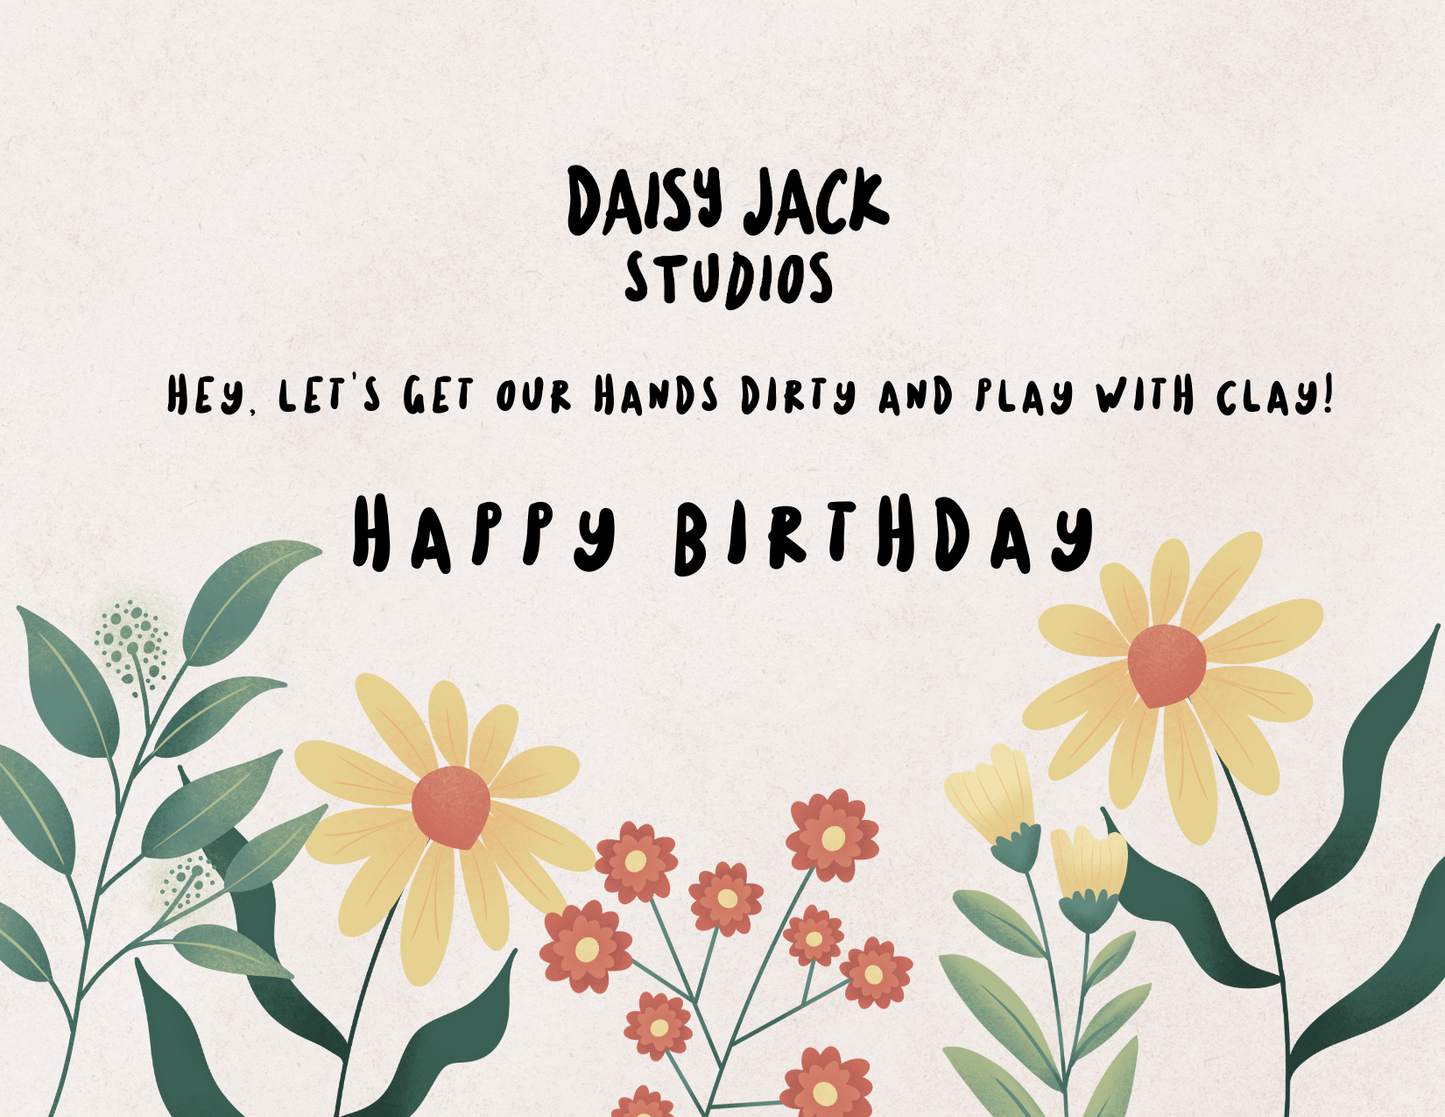 Daisy Jack Studios Gift Card